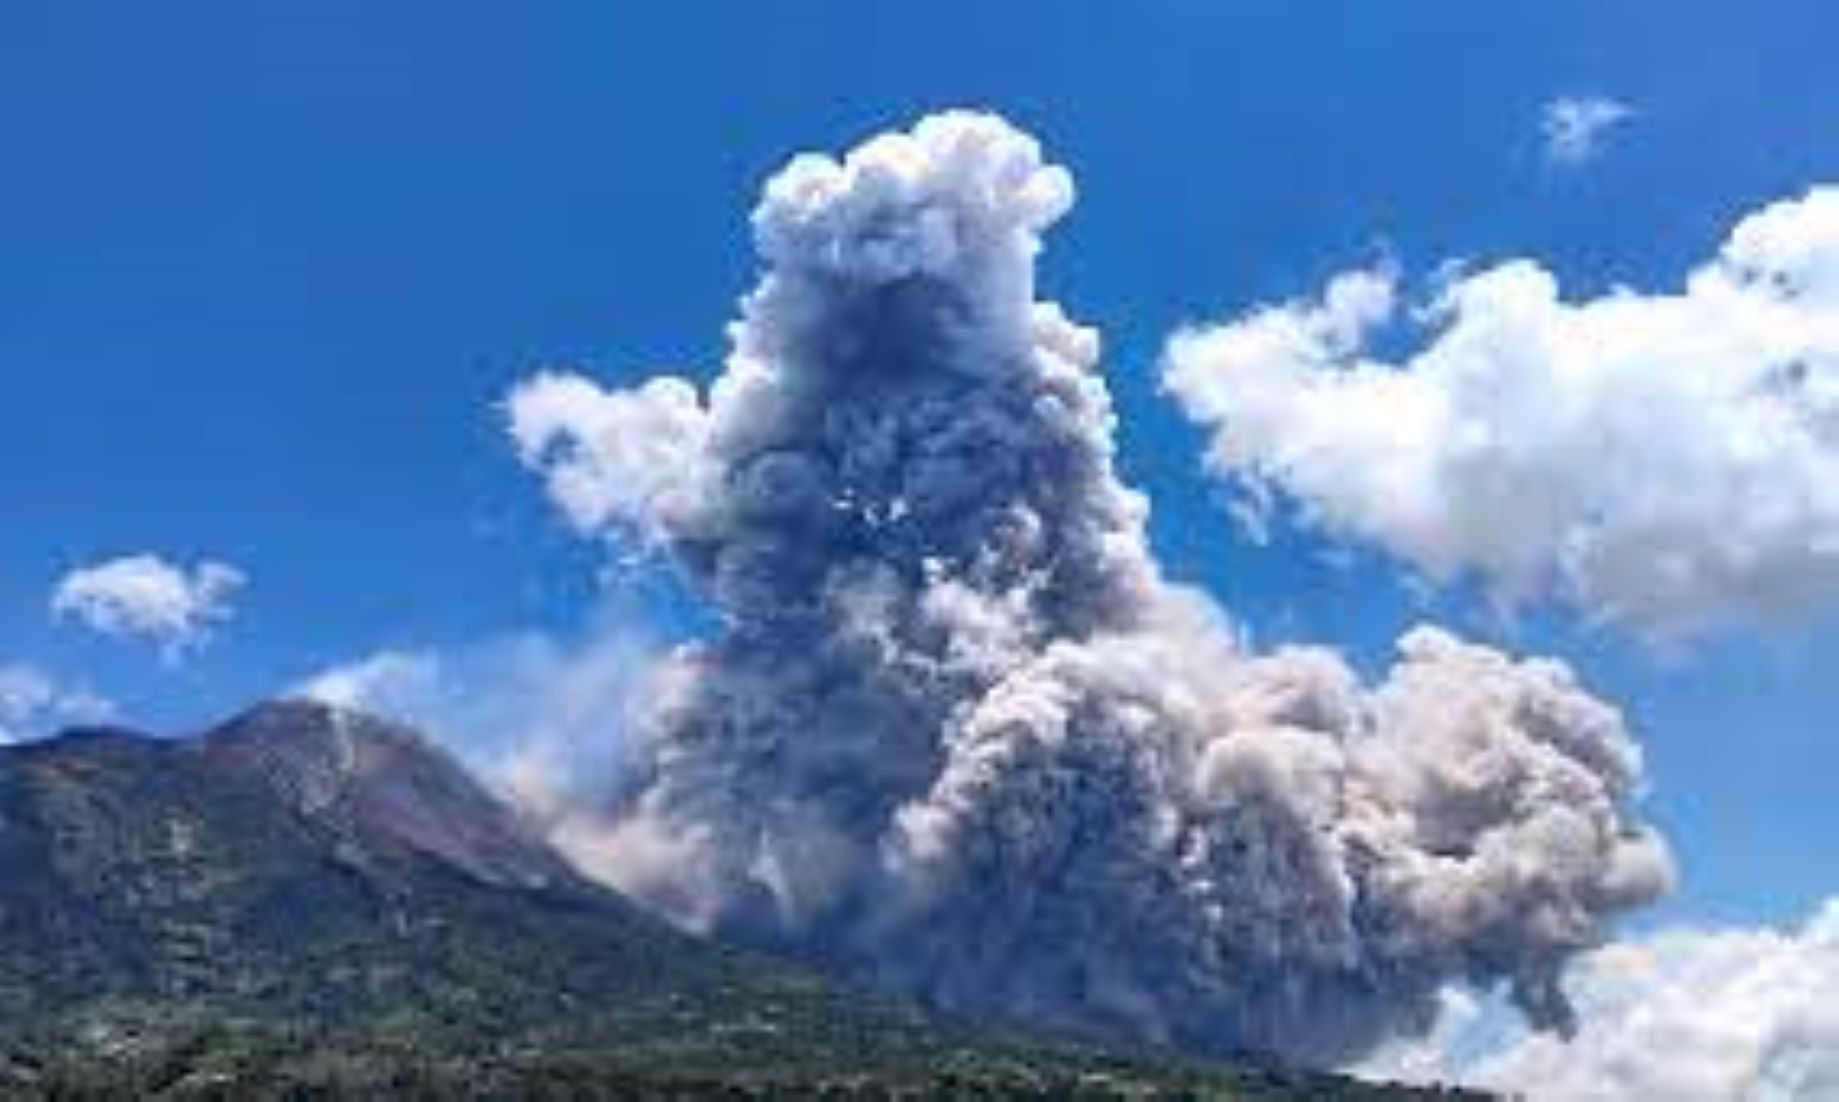 Indonesia’s Merapi Volcano Erupted, Spewing Hot Ash